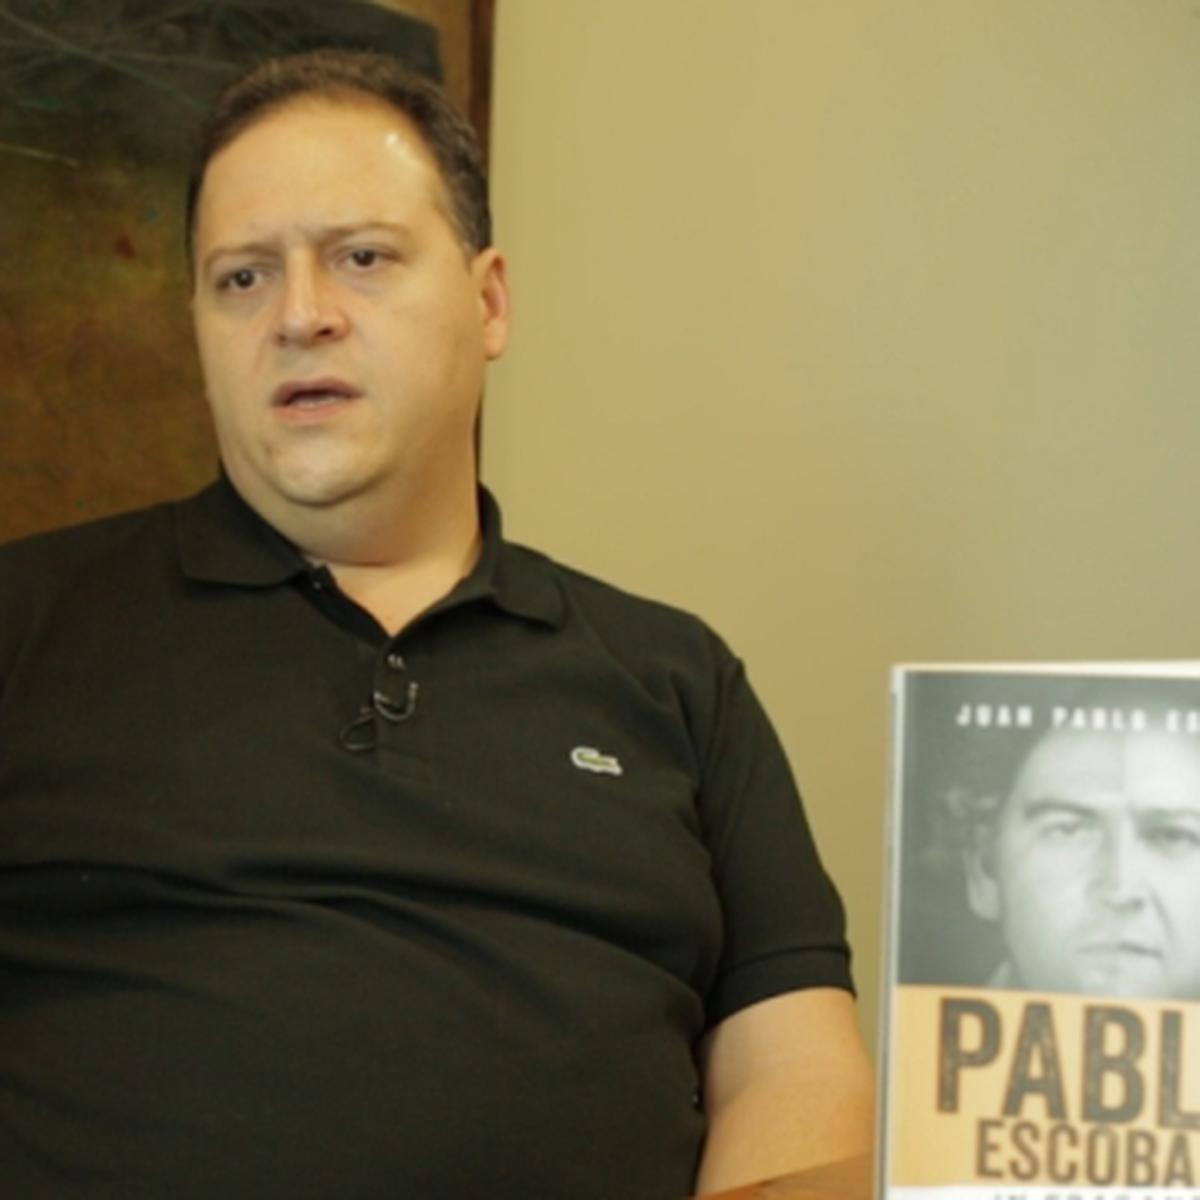 Juan Pablo Escobar: 